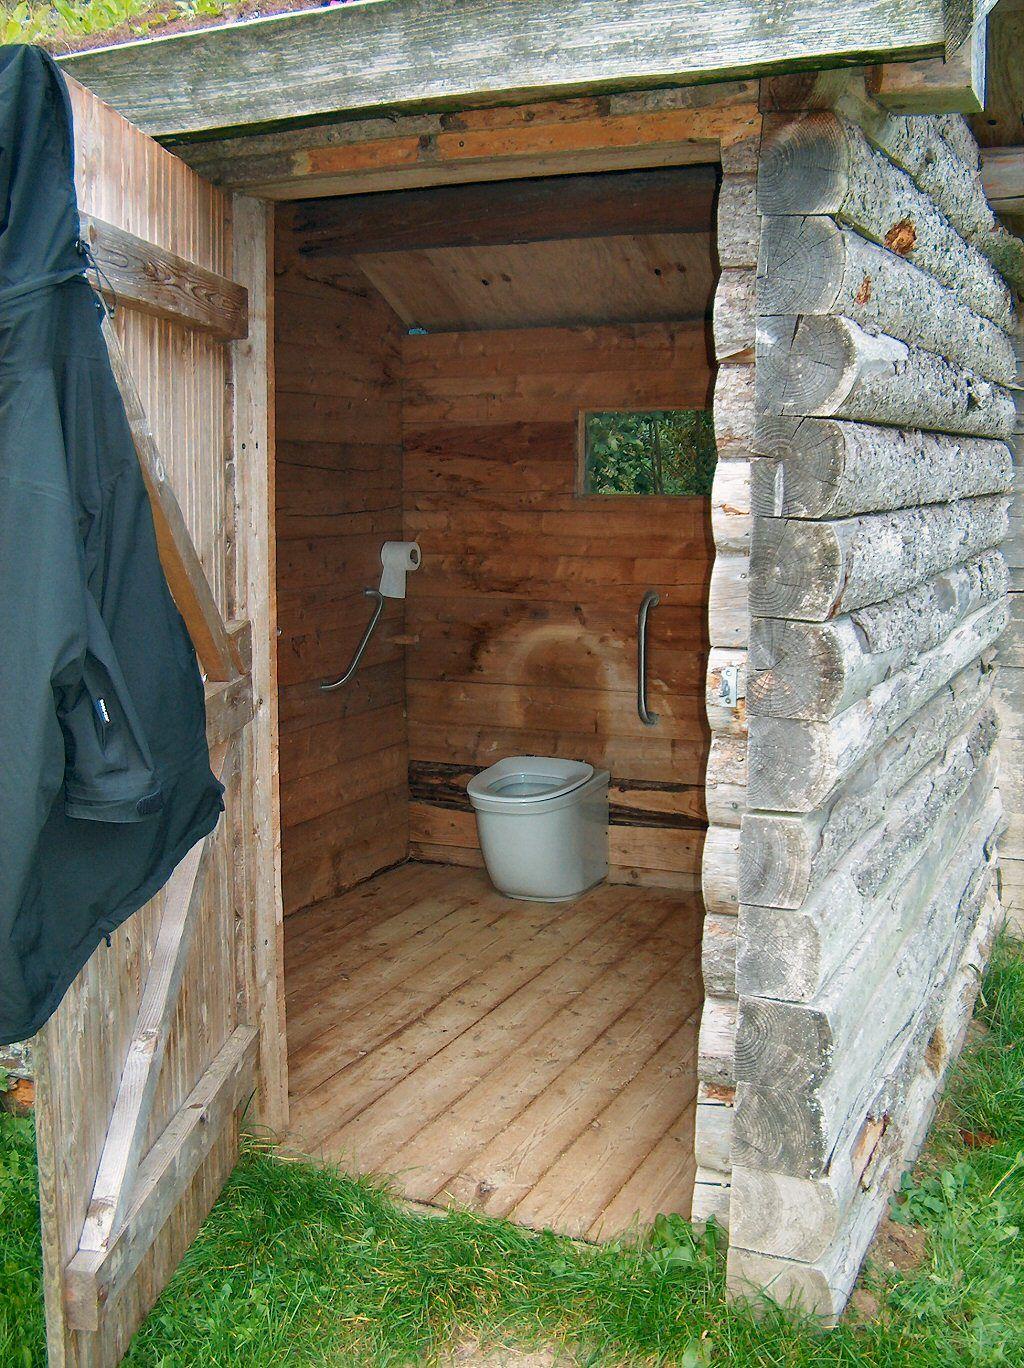 Multtoilet (composting toilet)